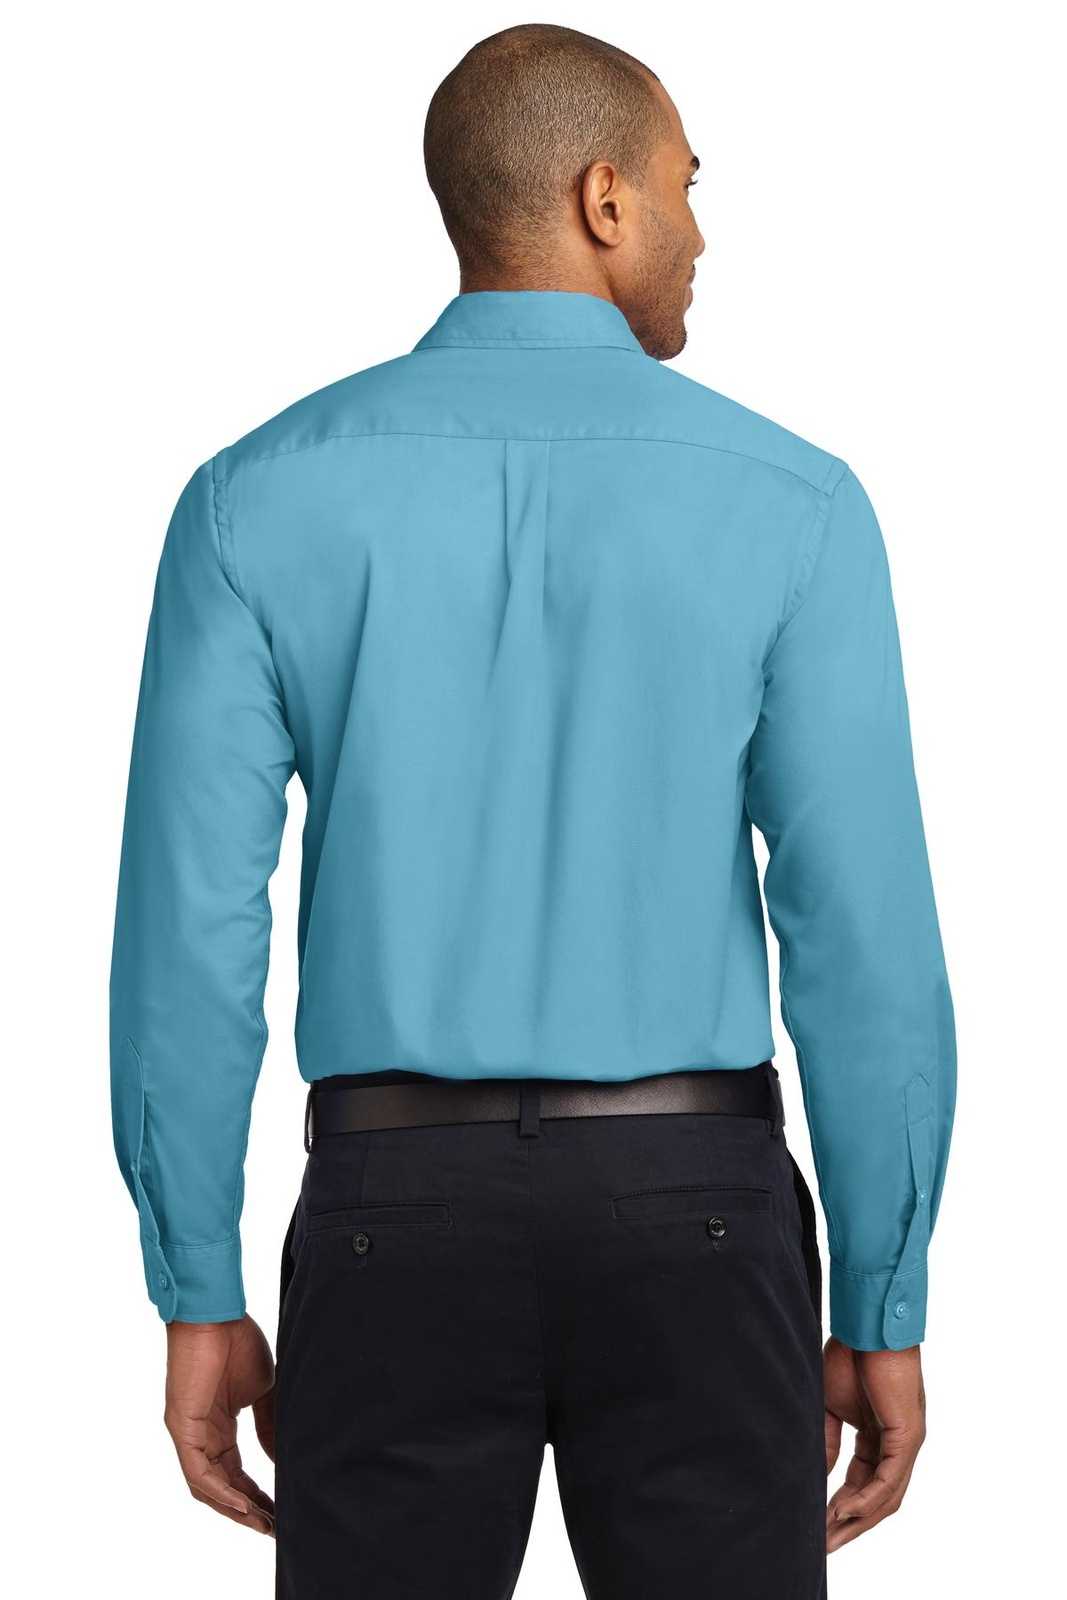 Port Authority S608 Long Sleeve Easy Care Shirt - Maui Blue - HIT a Double - 1